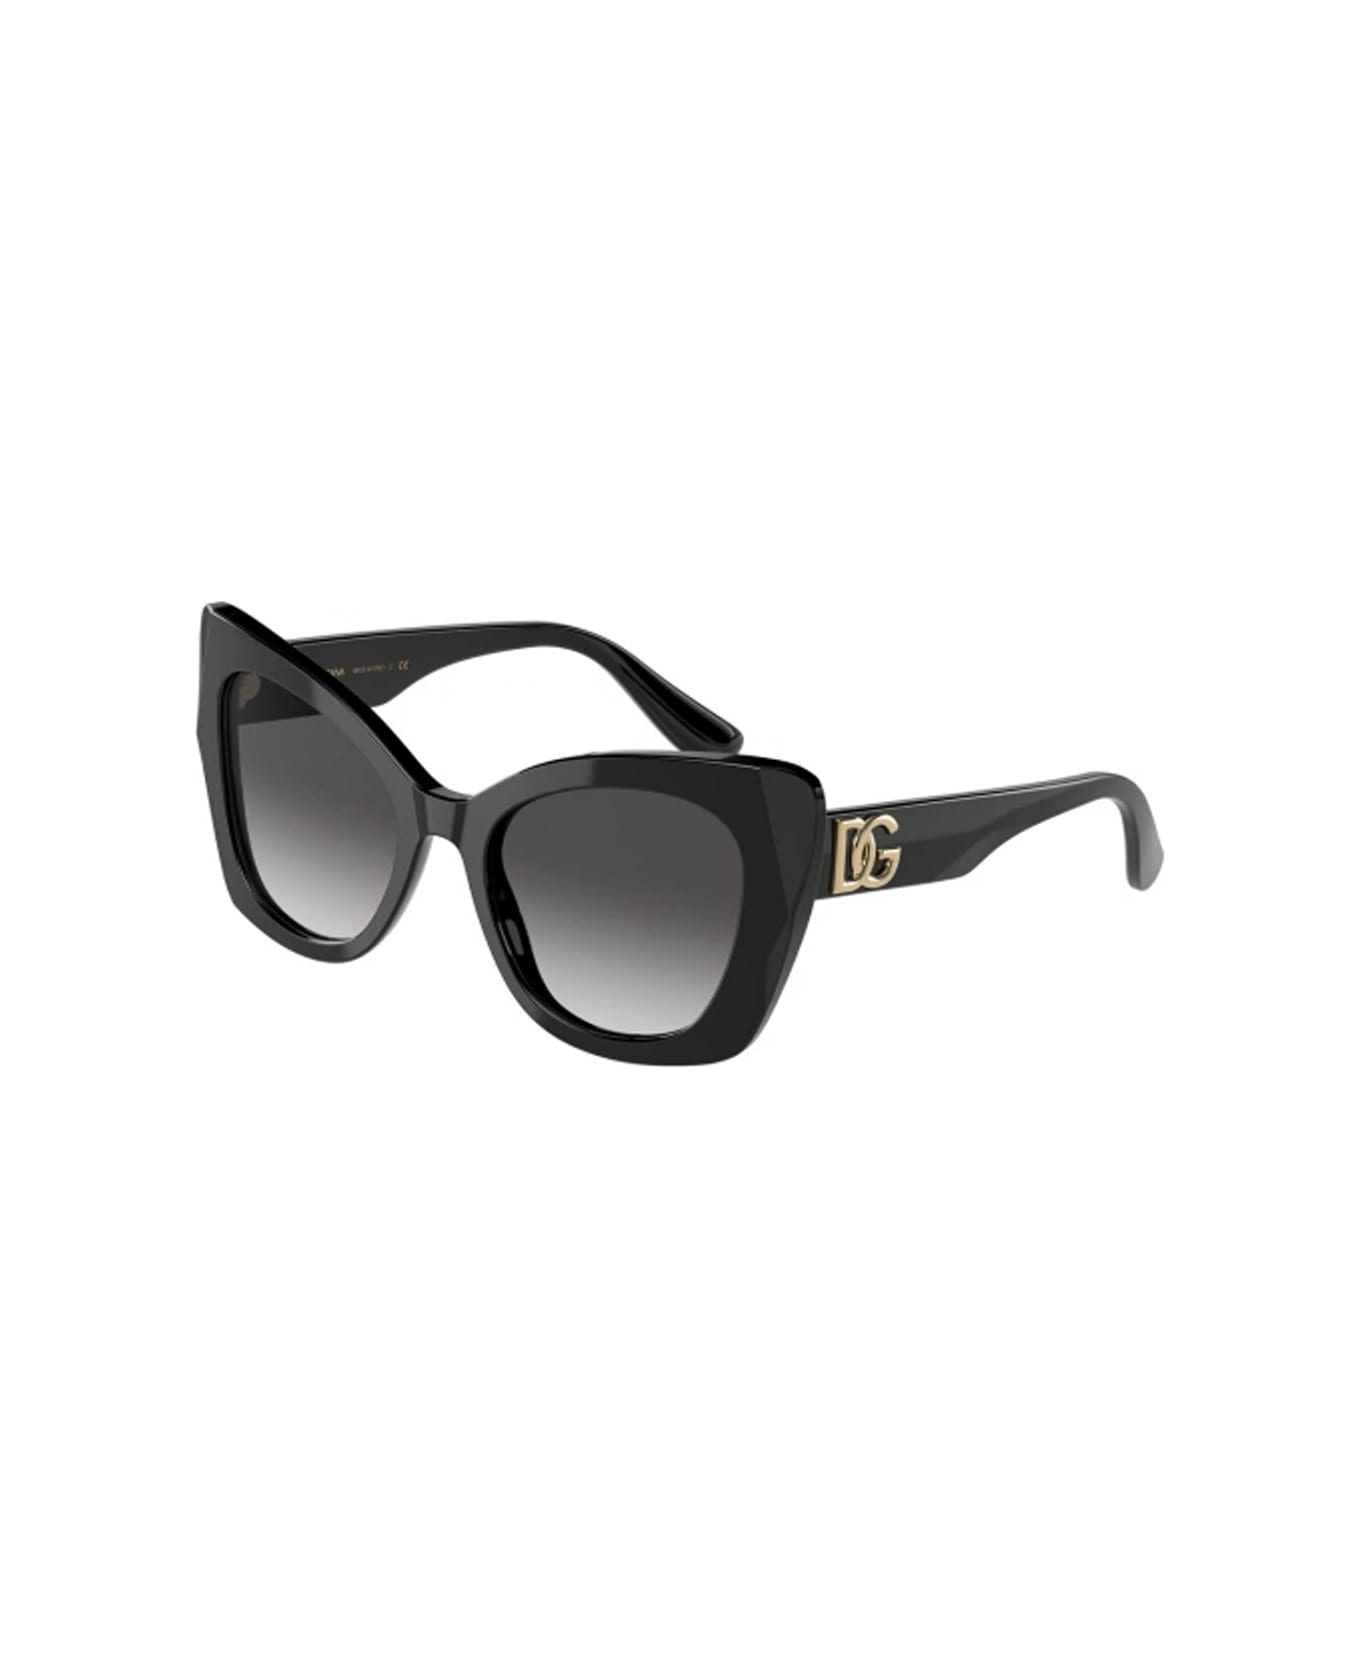 Dolce & Gabbana Eyewear Dg4405 501/8g Sunglasses - Nero